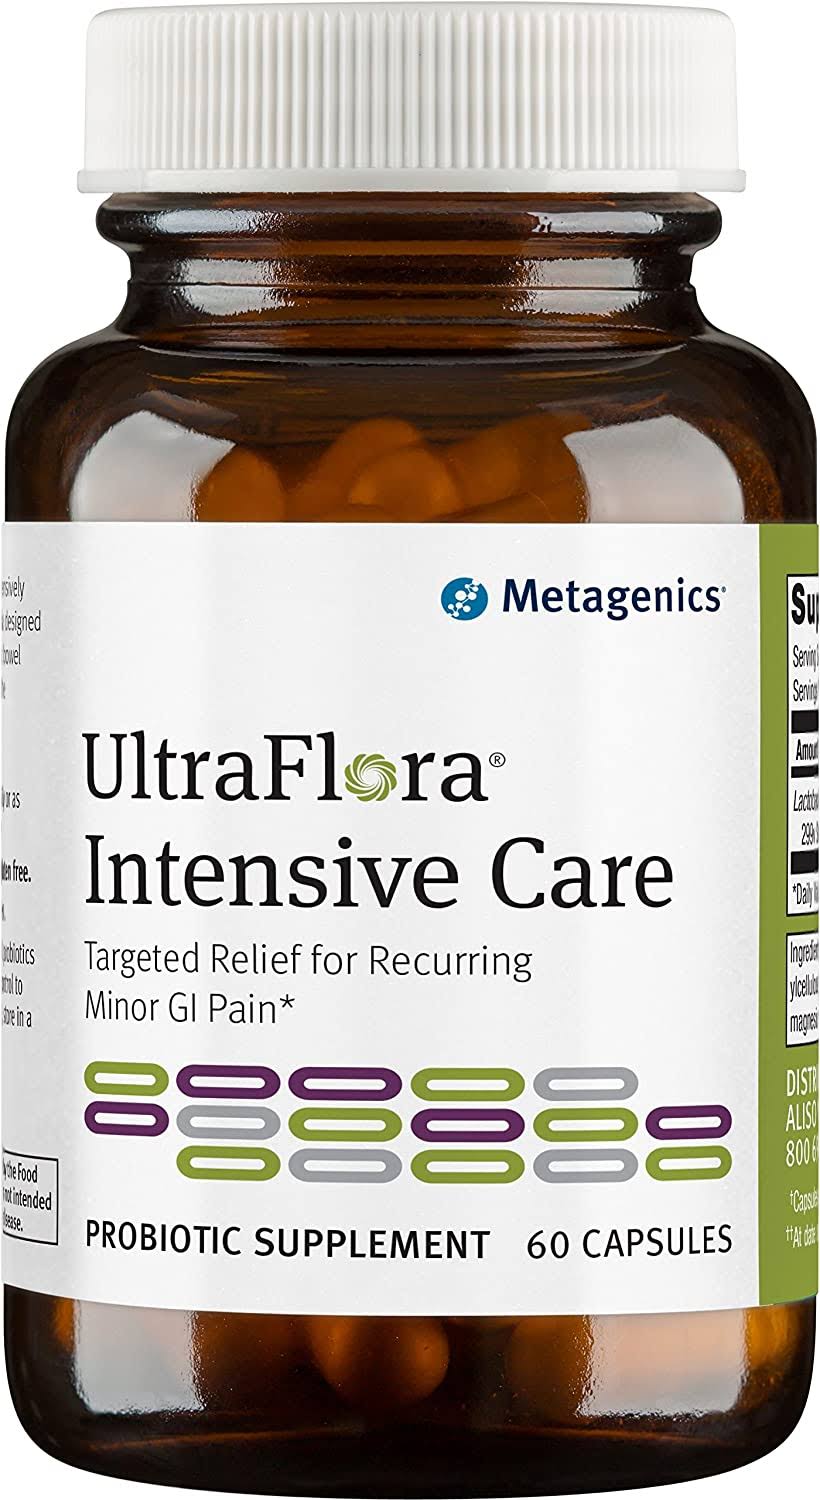 Metagenics UltraFlora Intensive Care Probiotic Supplement - 60ct